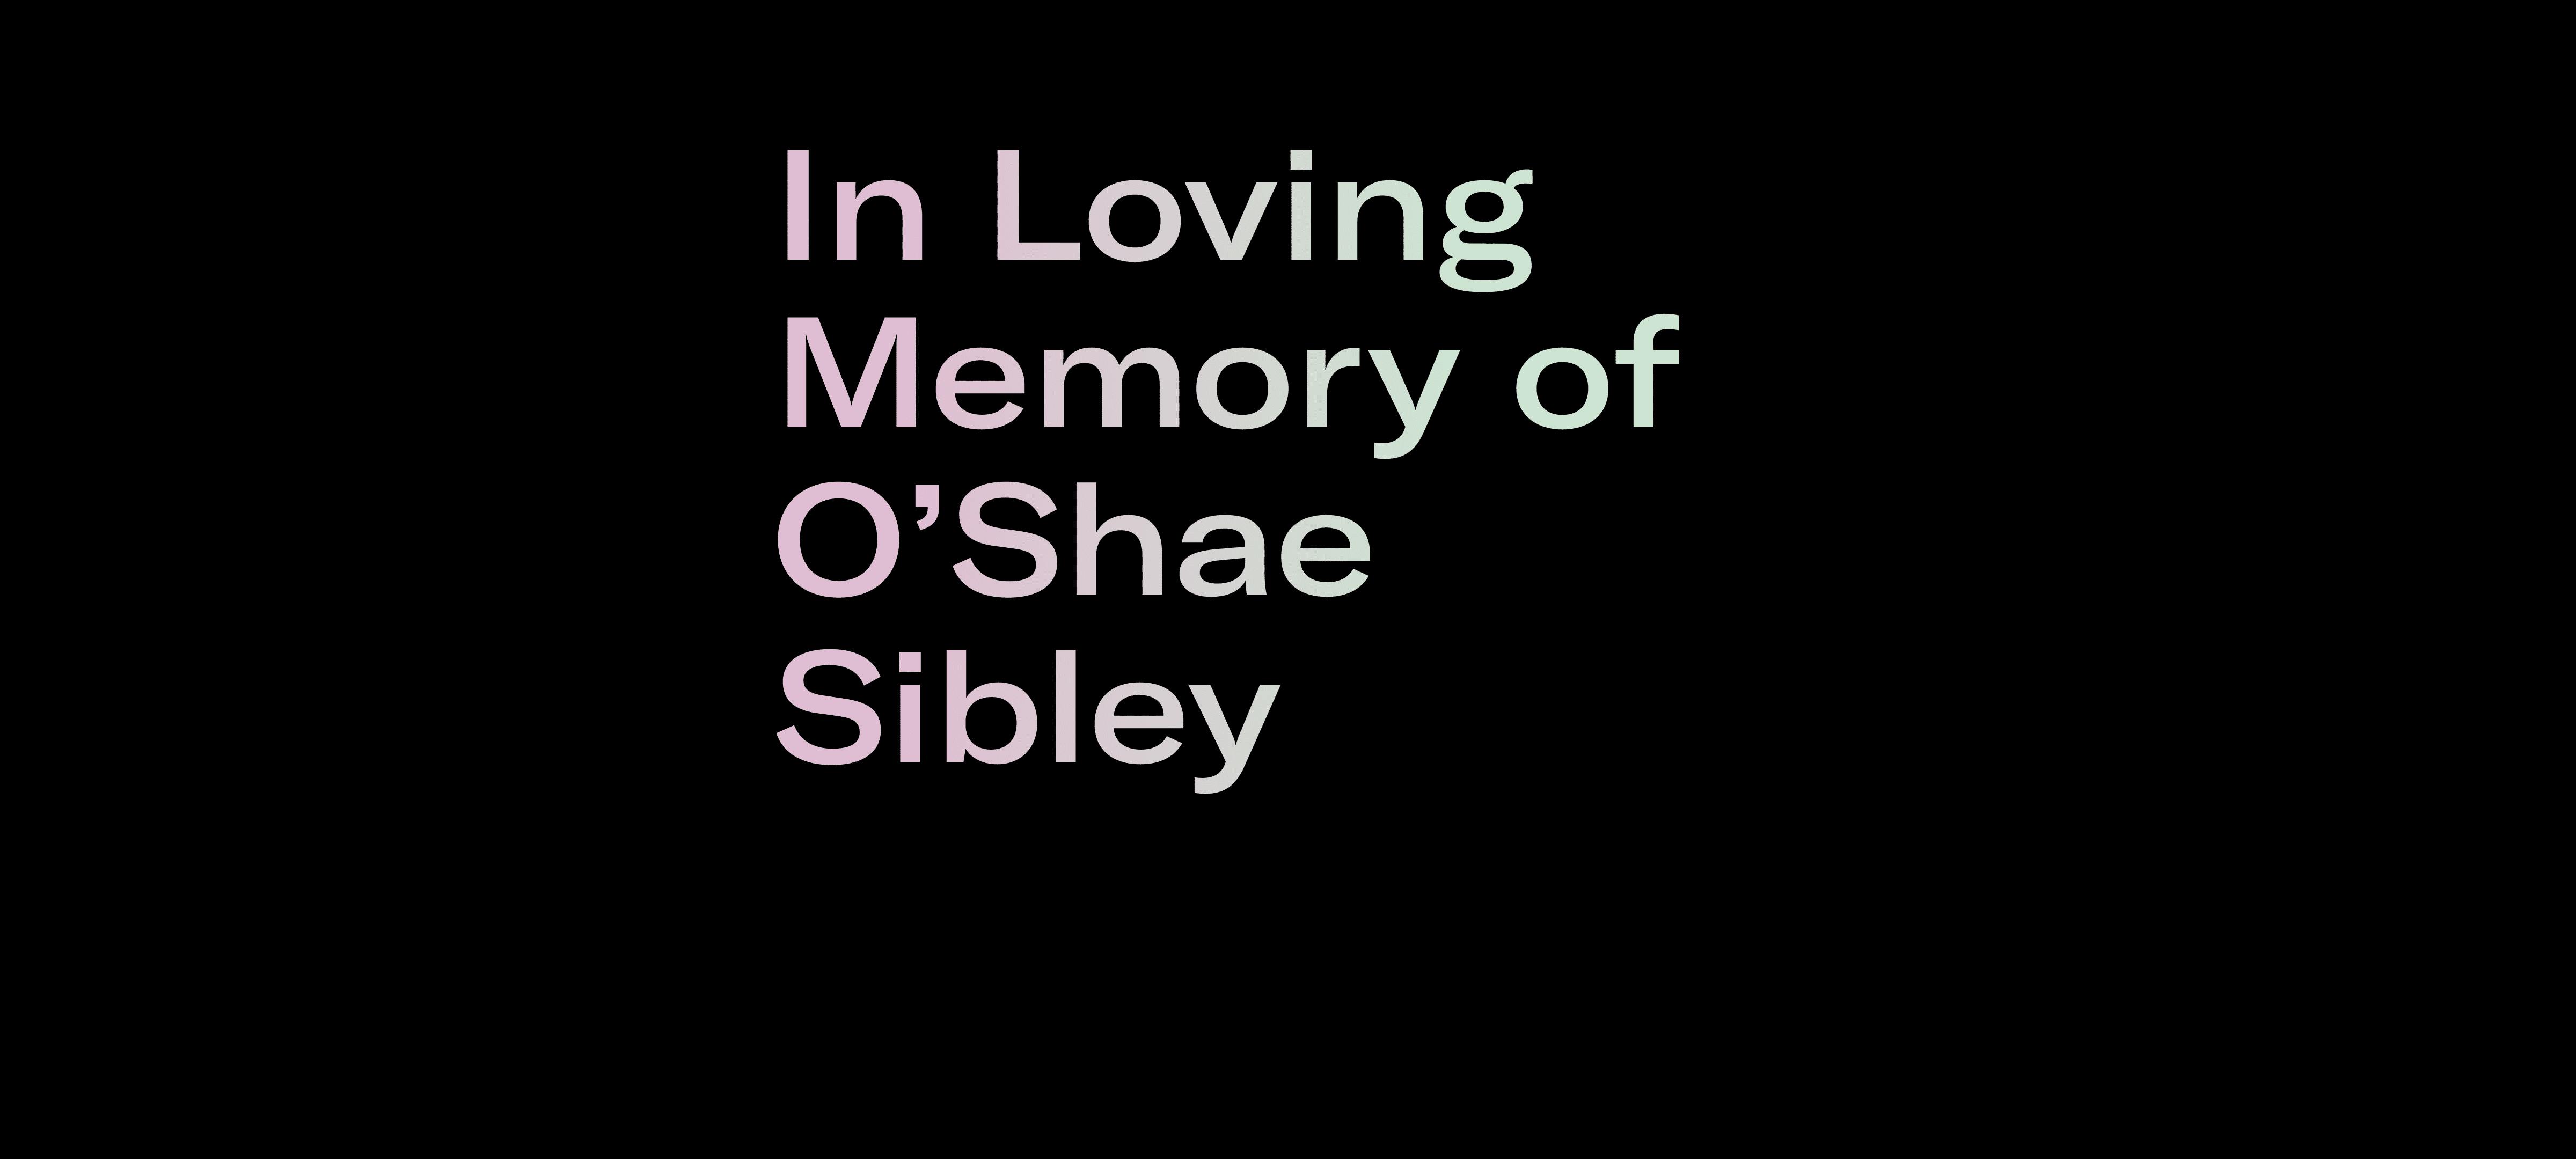 In Loving Memory of O’Shae Sibley